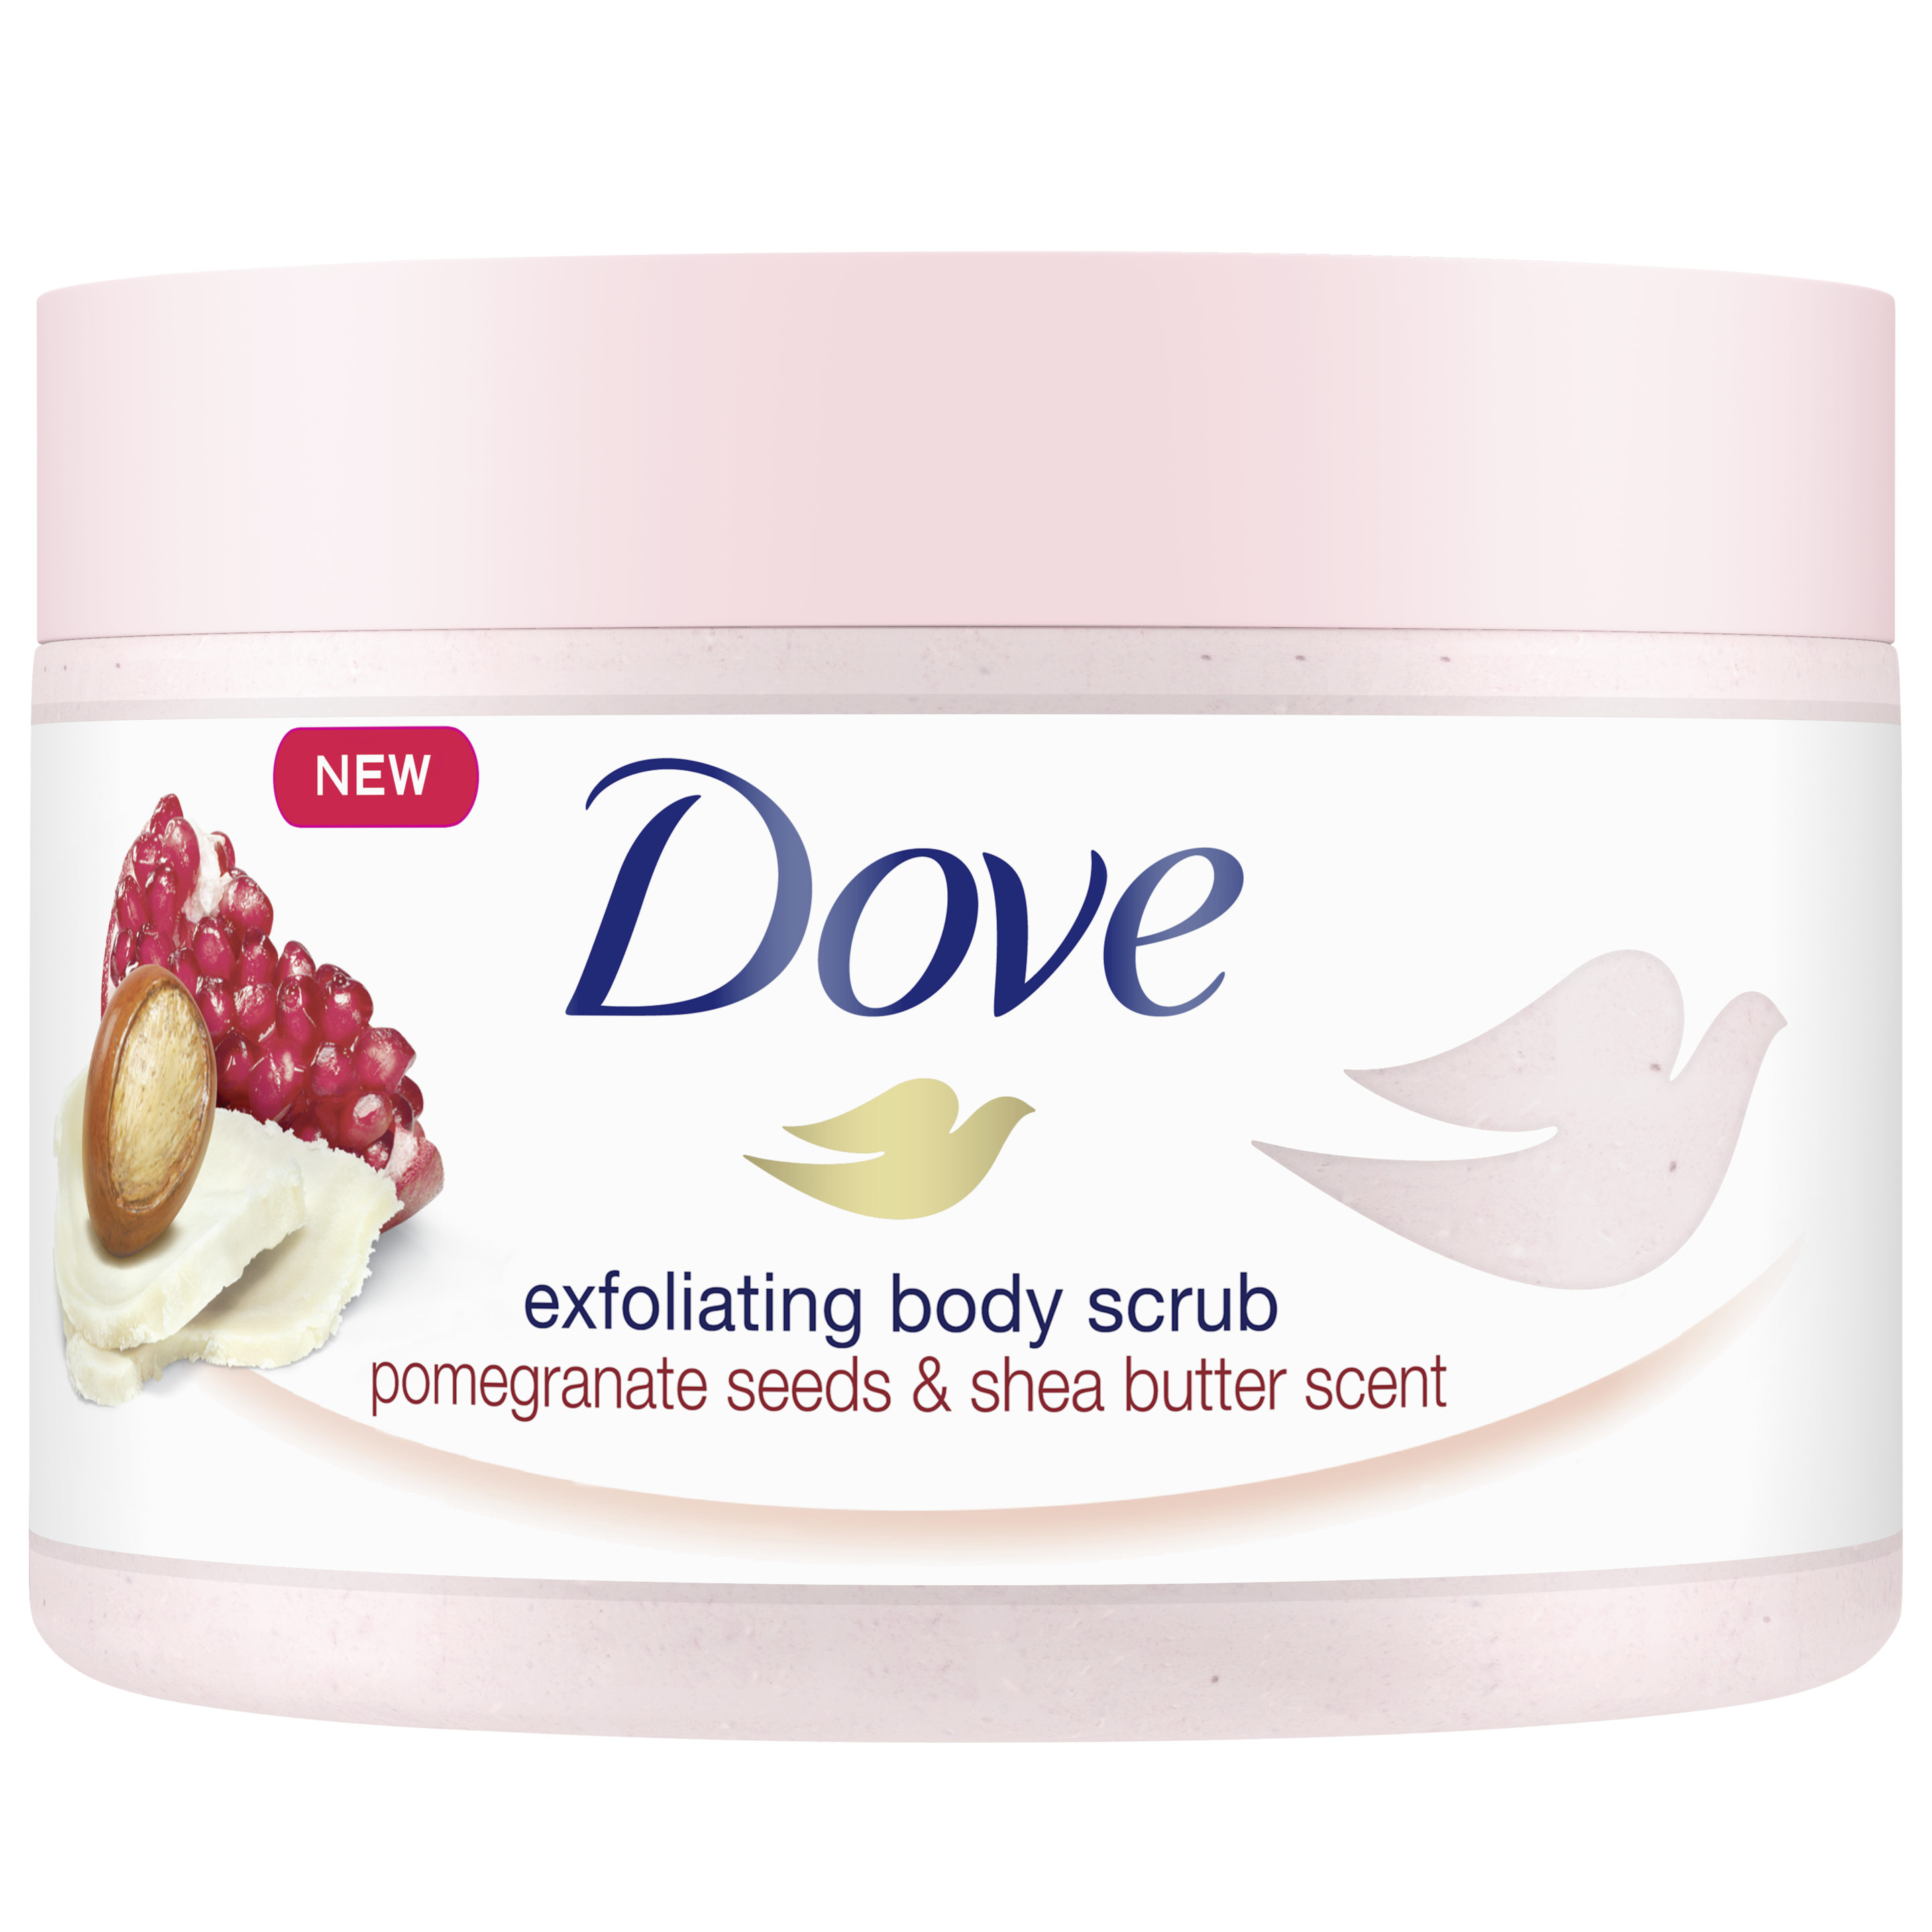 Dove Pomegranate Seeds & Shea Butter Body Scrub